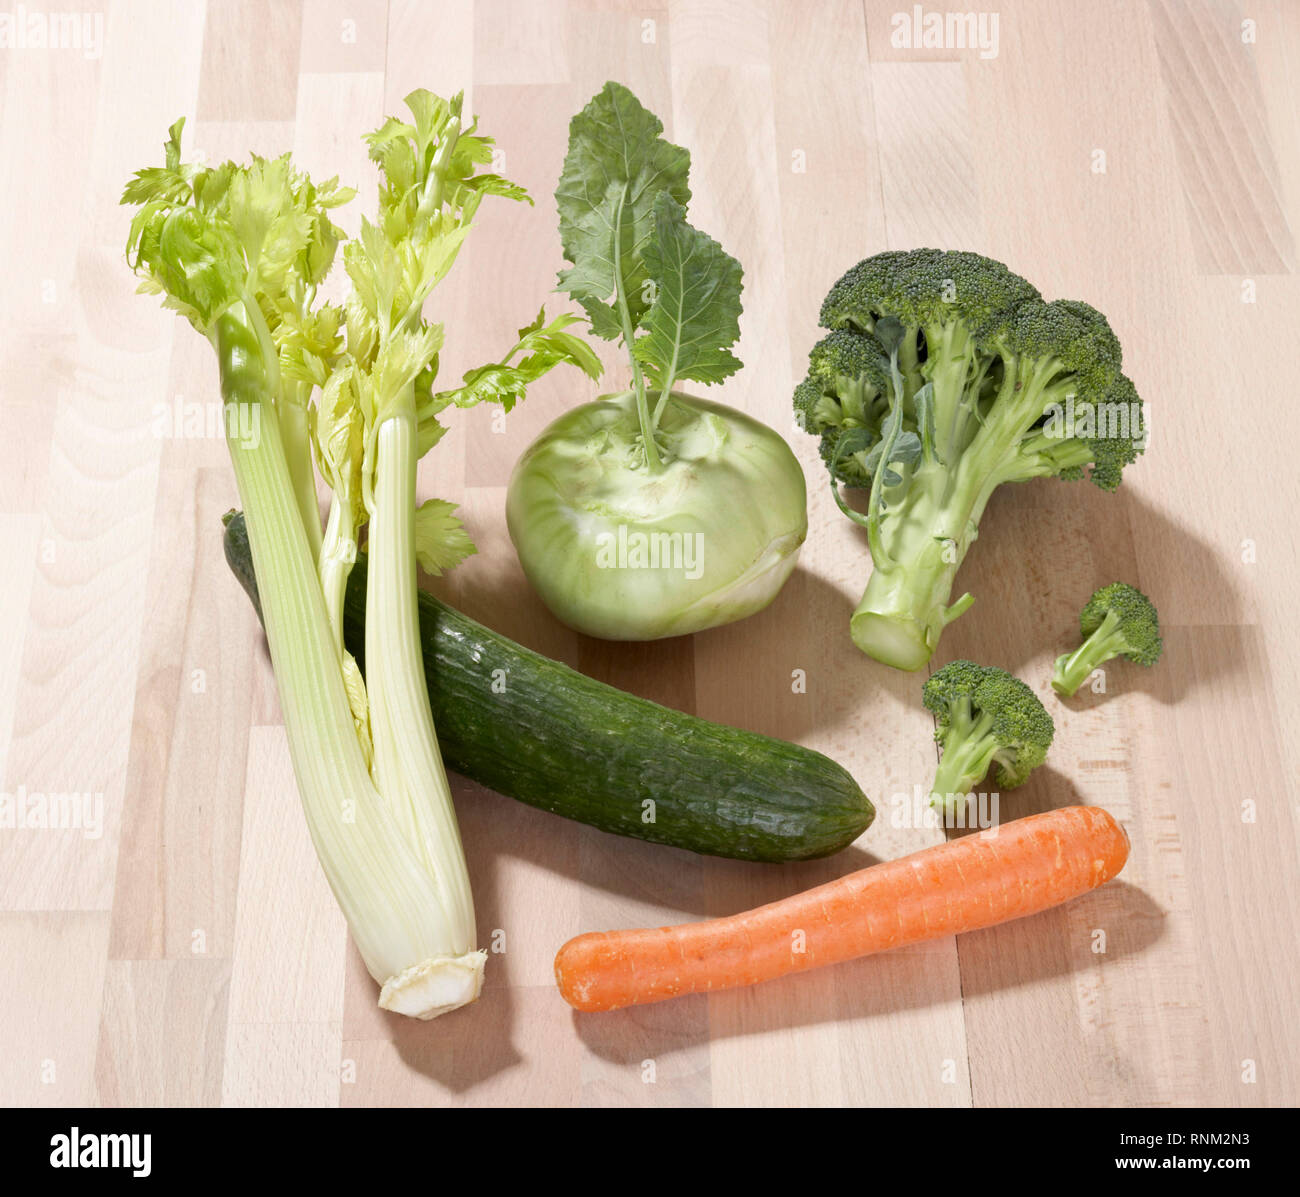 Vegetables: Greenspouting Broccoli, Cucumber, Carrot , Kohlrabi, German Turnip, Stalk Celery. Stock Photo